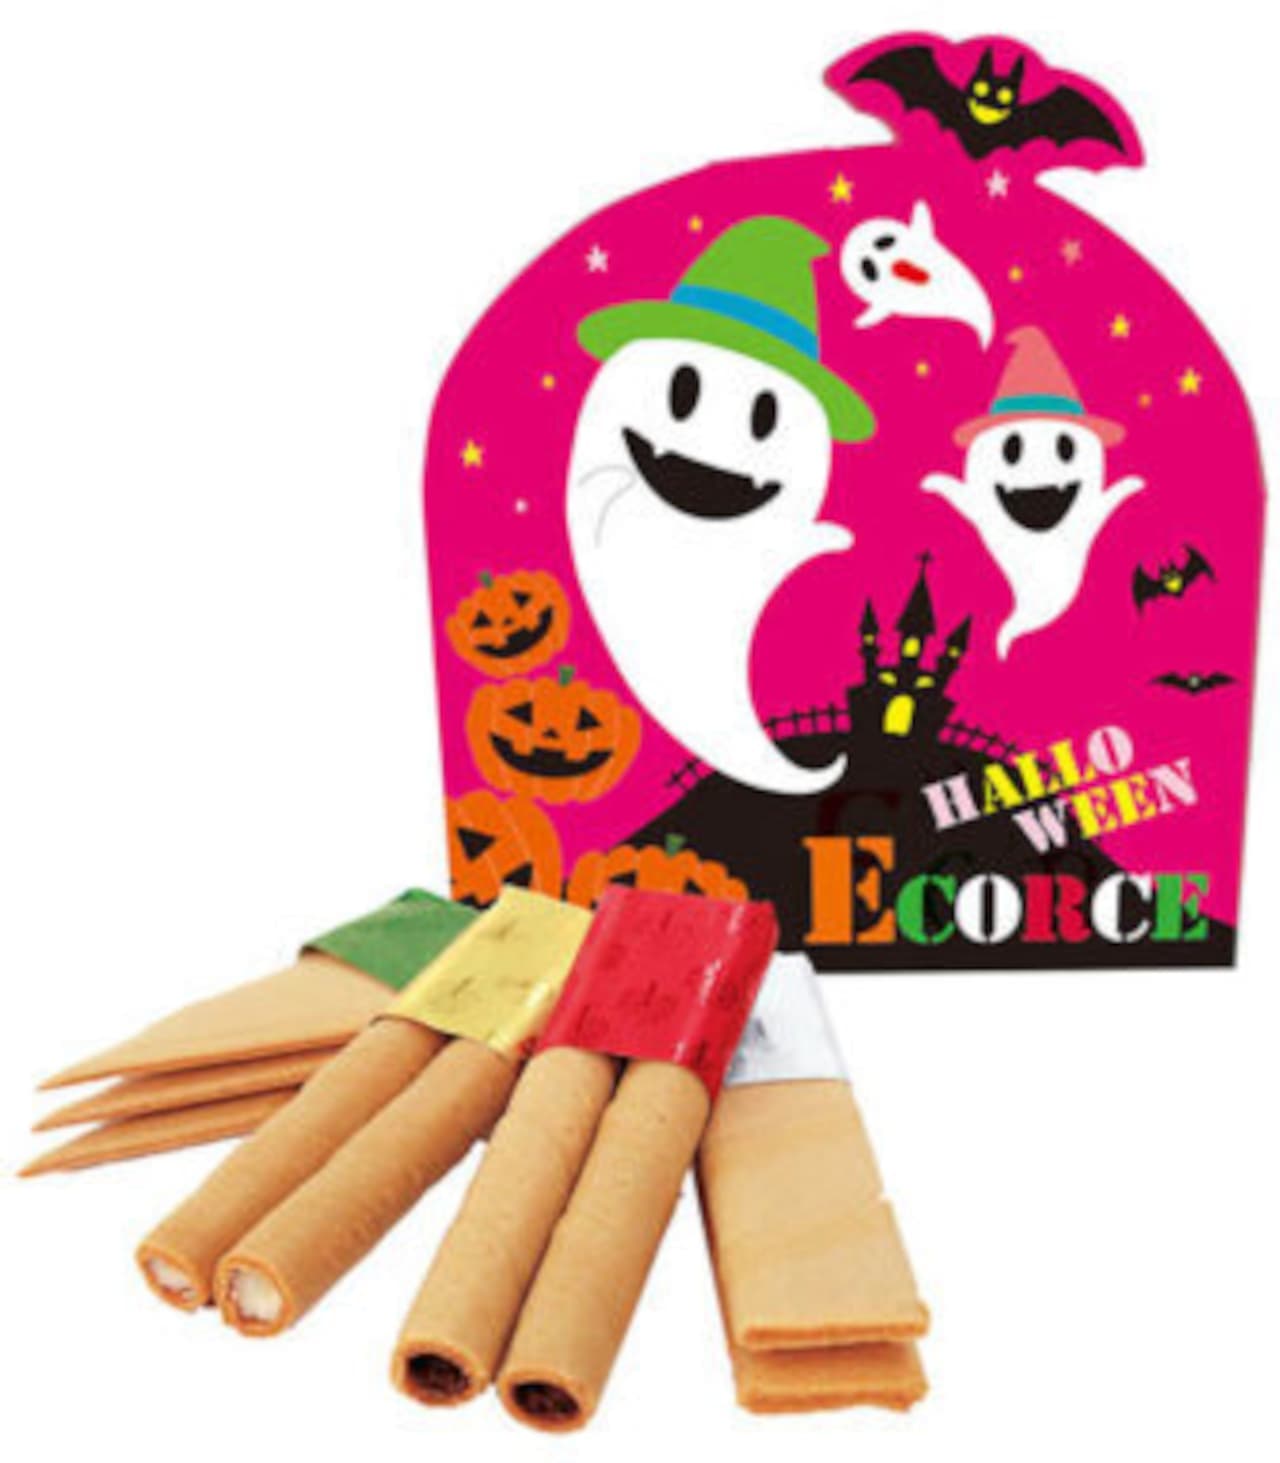 Hon Takasagaya "Halloween Ecorse" and "Halloween Ecolina